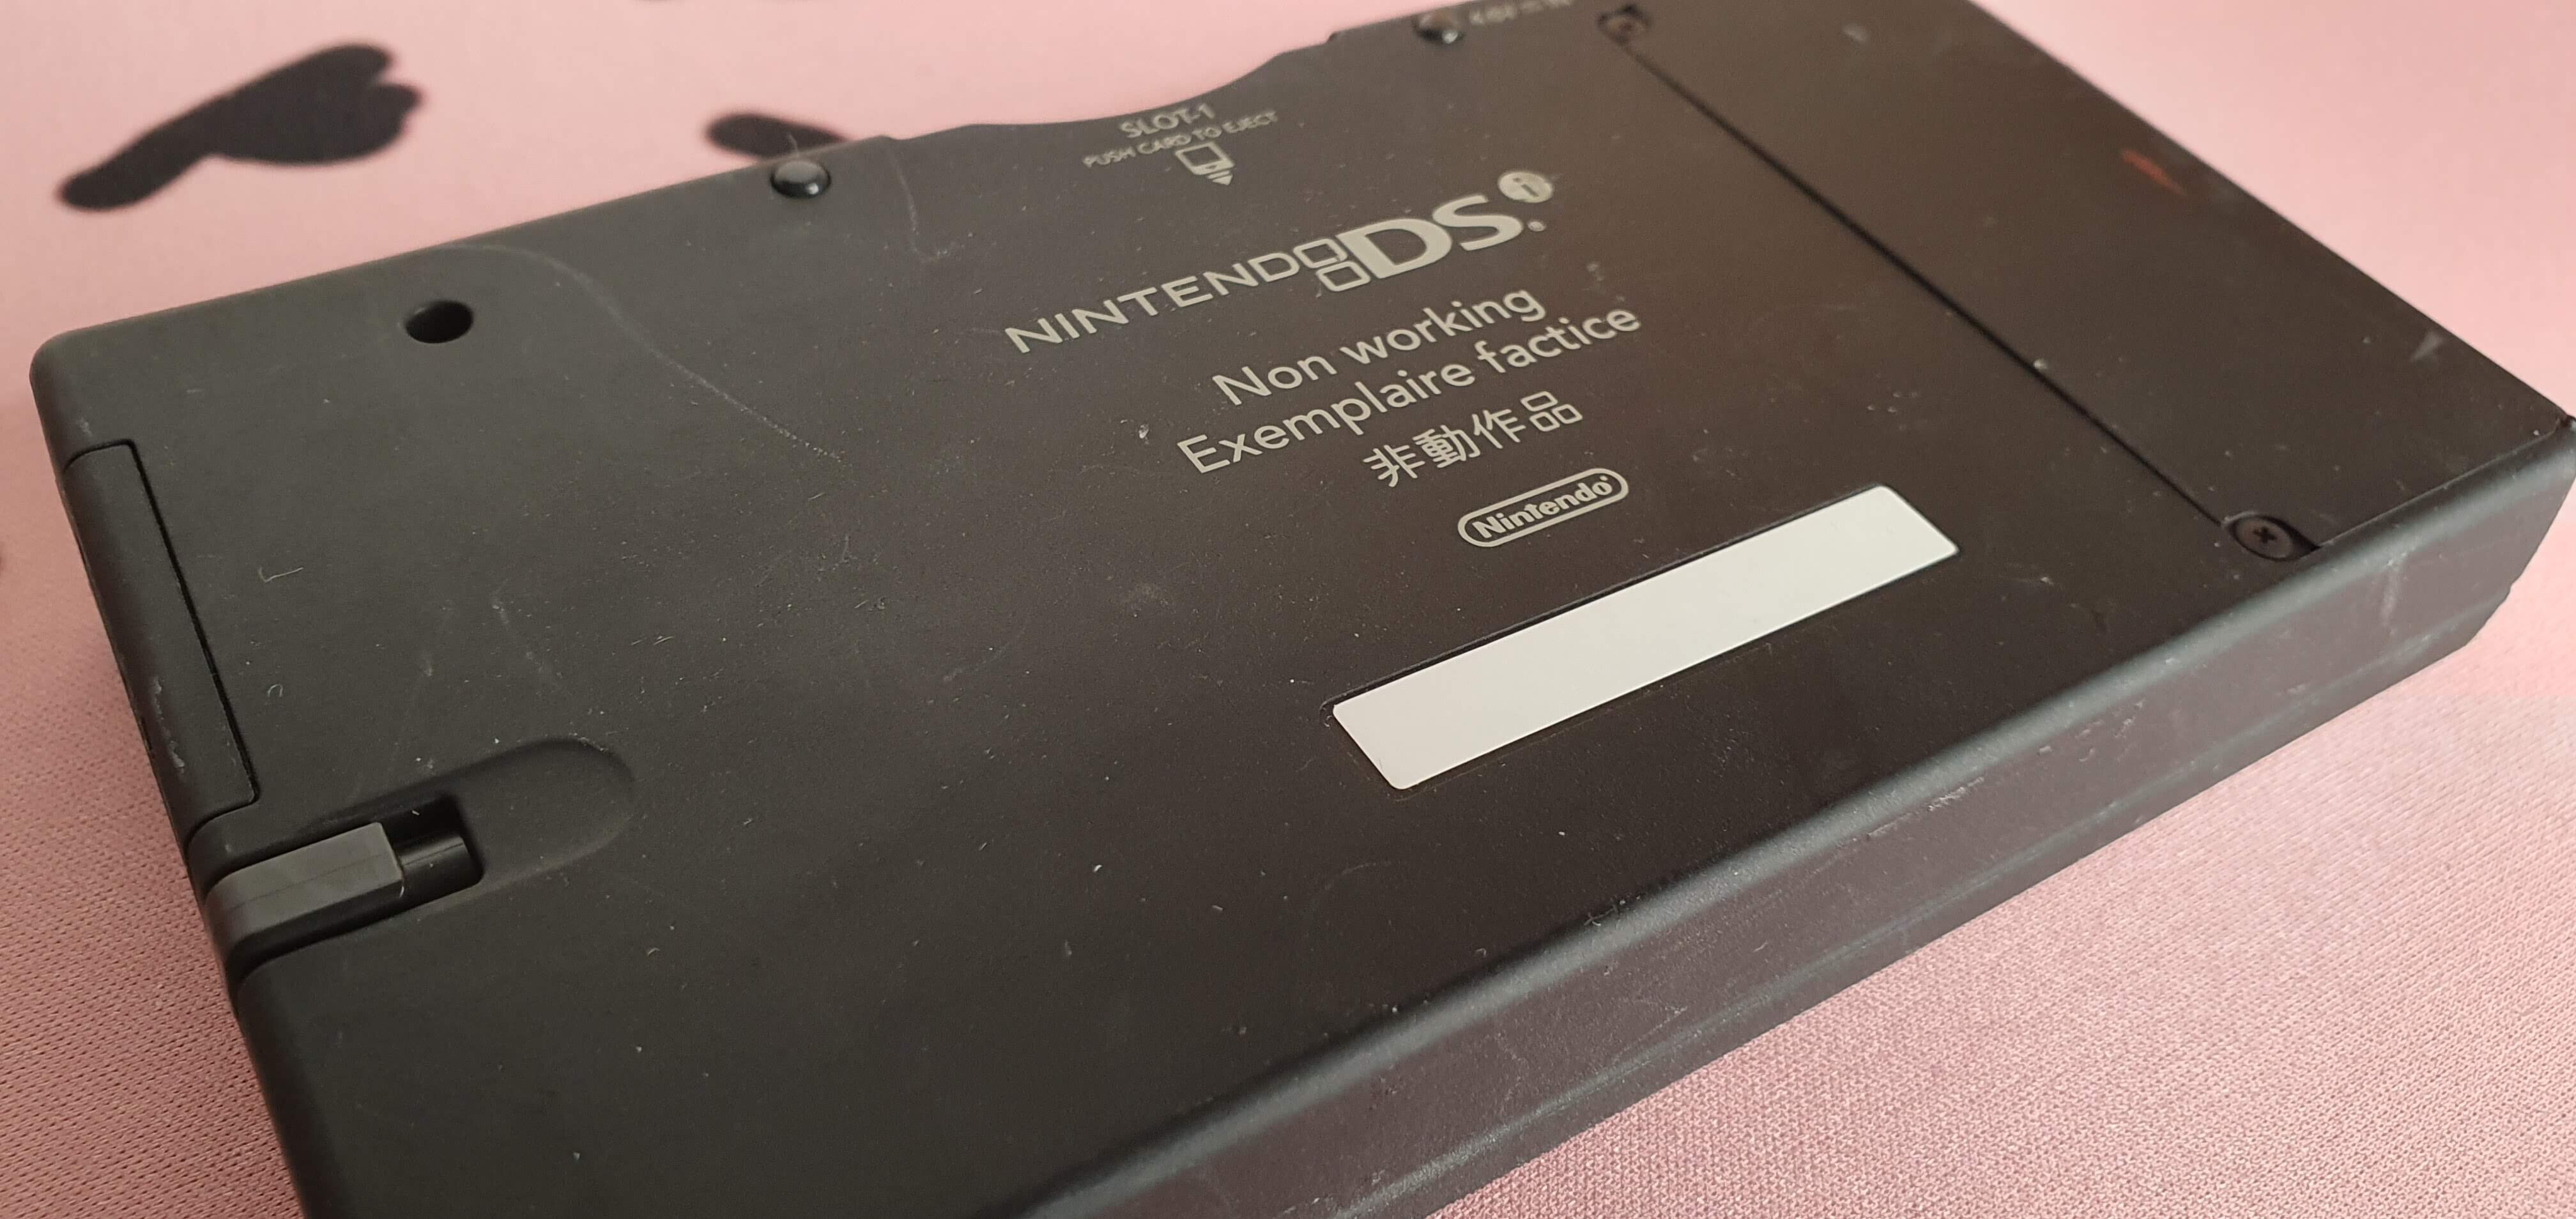  Nintendo DSi Non Working Exemplaire Factice Console